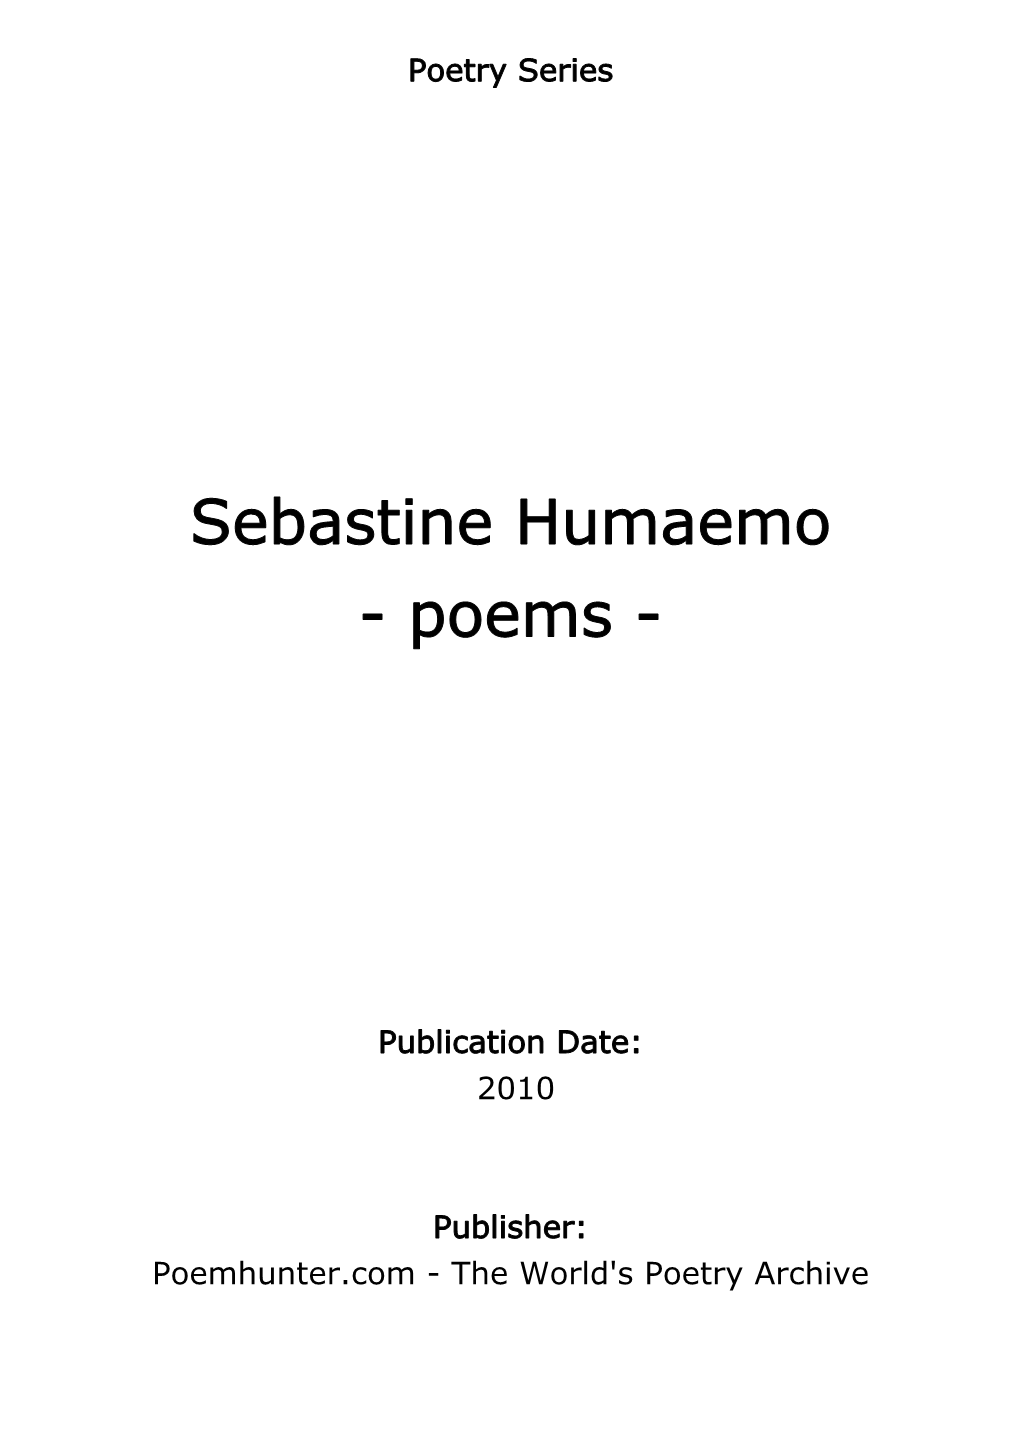 Sebastine Humaemo - Poems